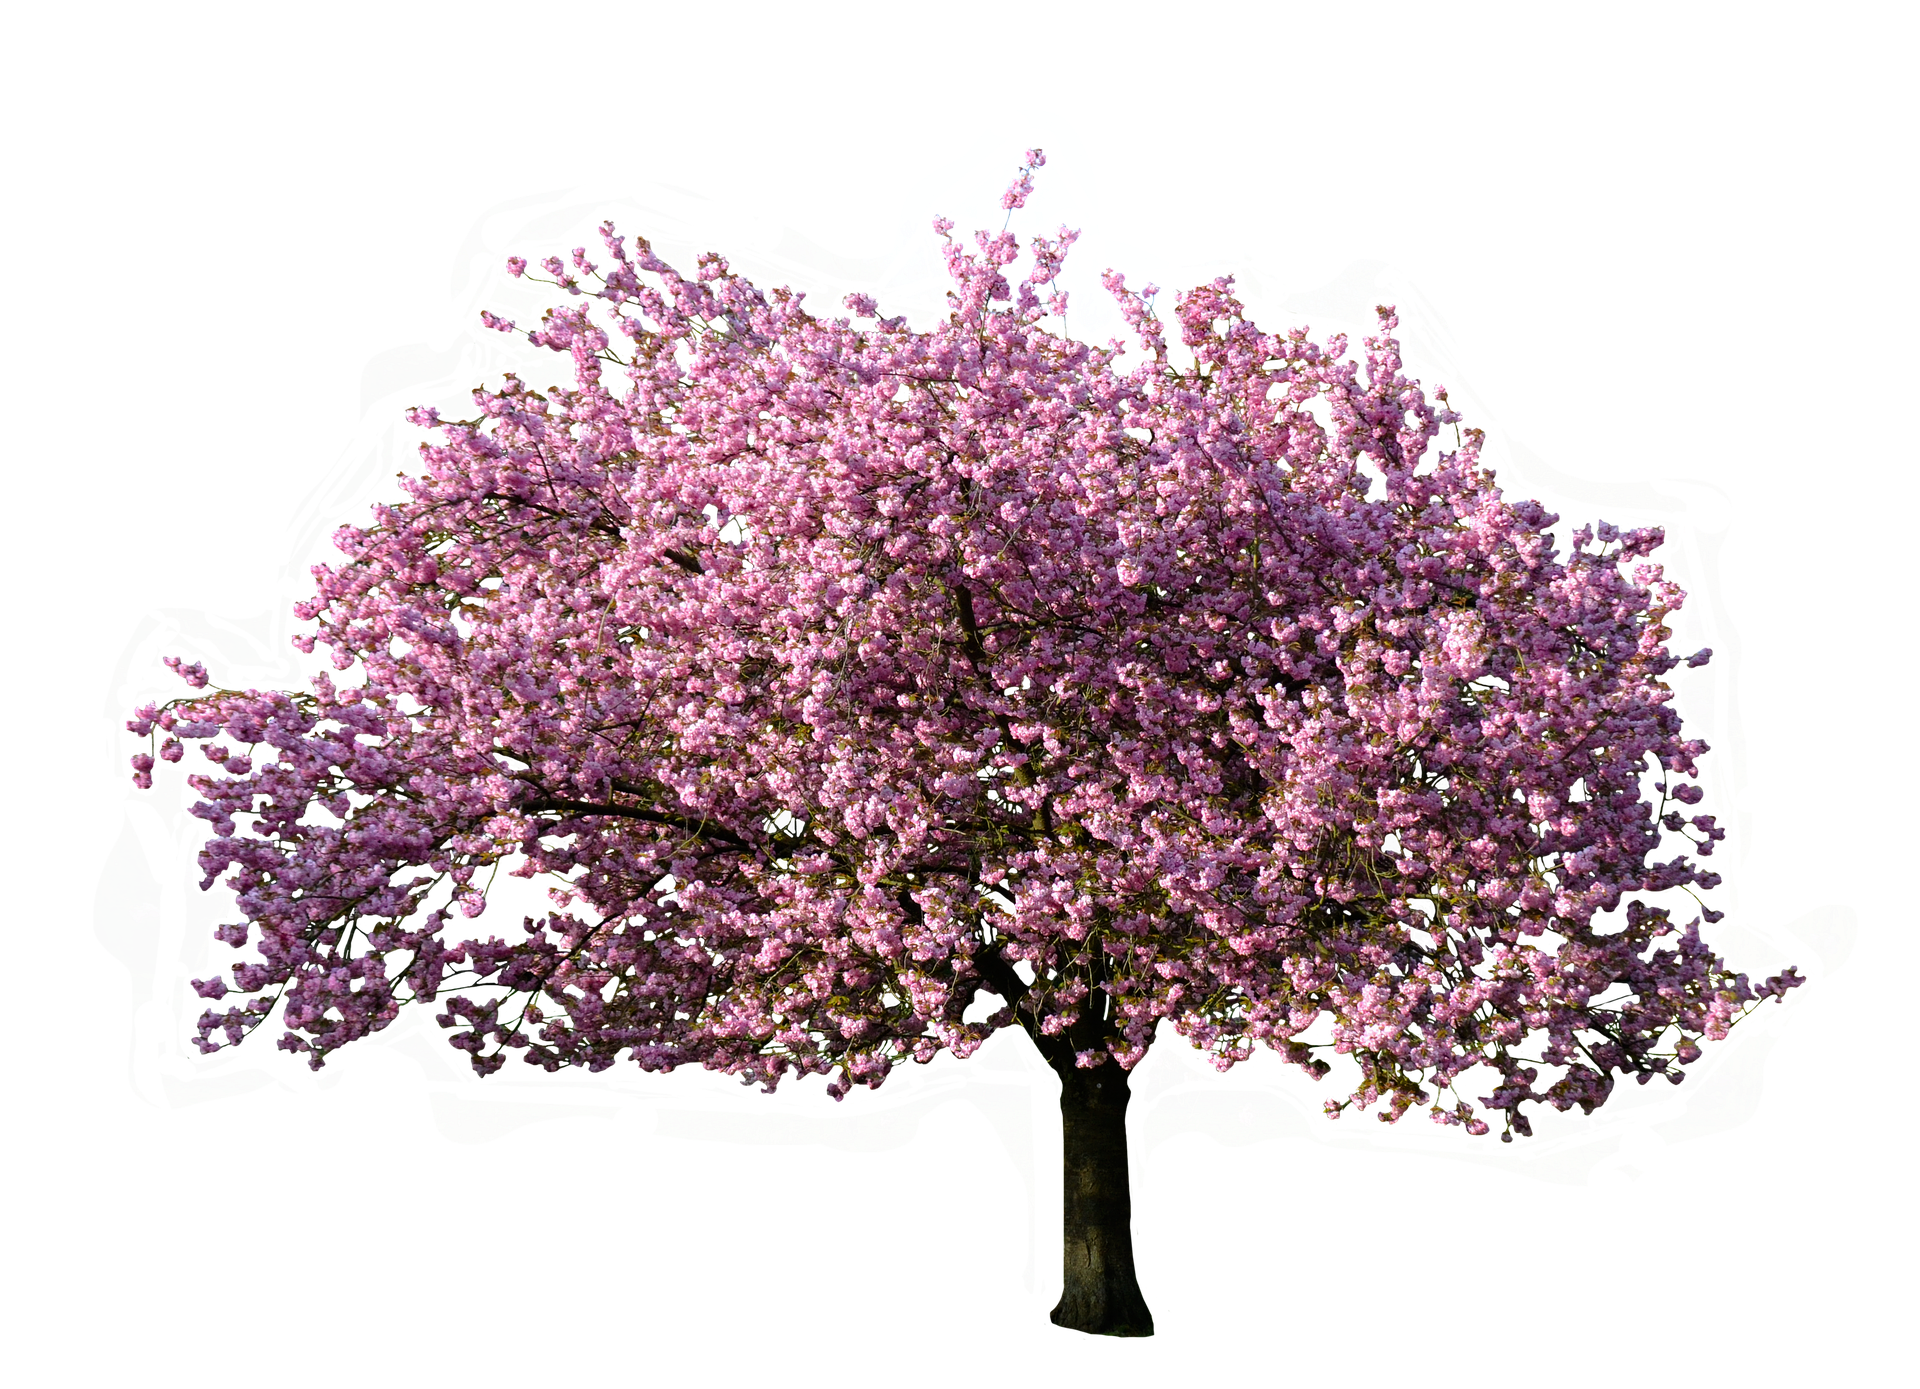 Flower tree photo